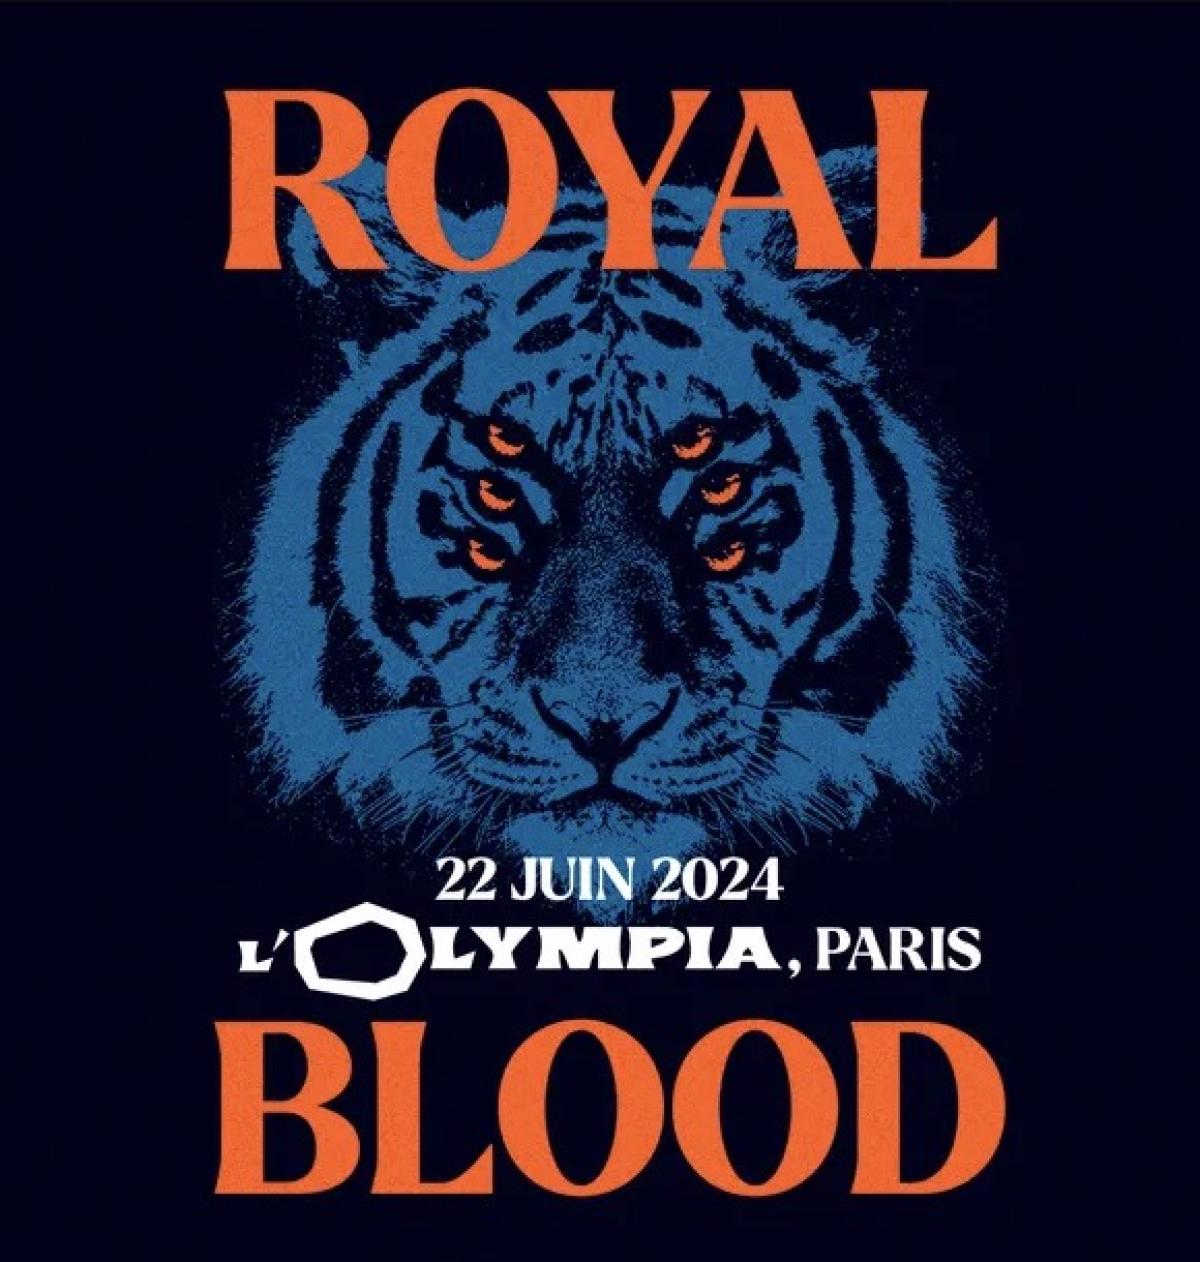 Billets Royal Blood (Olympia - Paris)